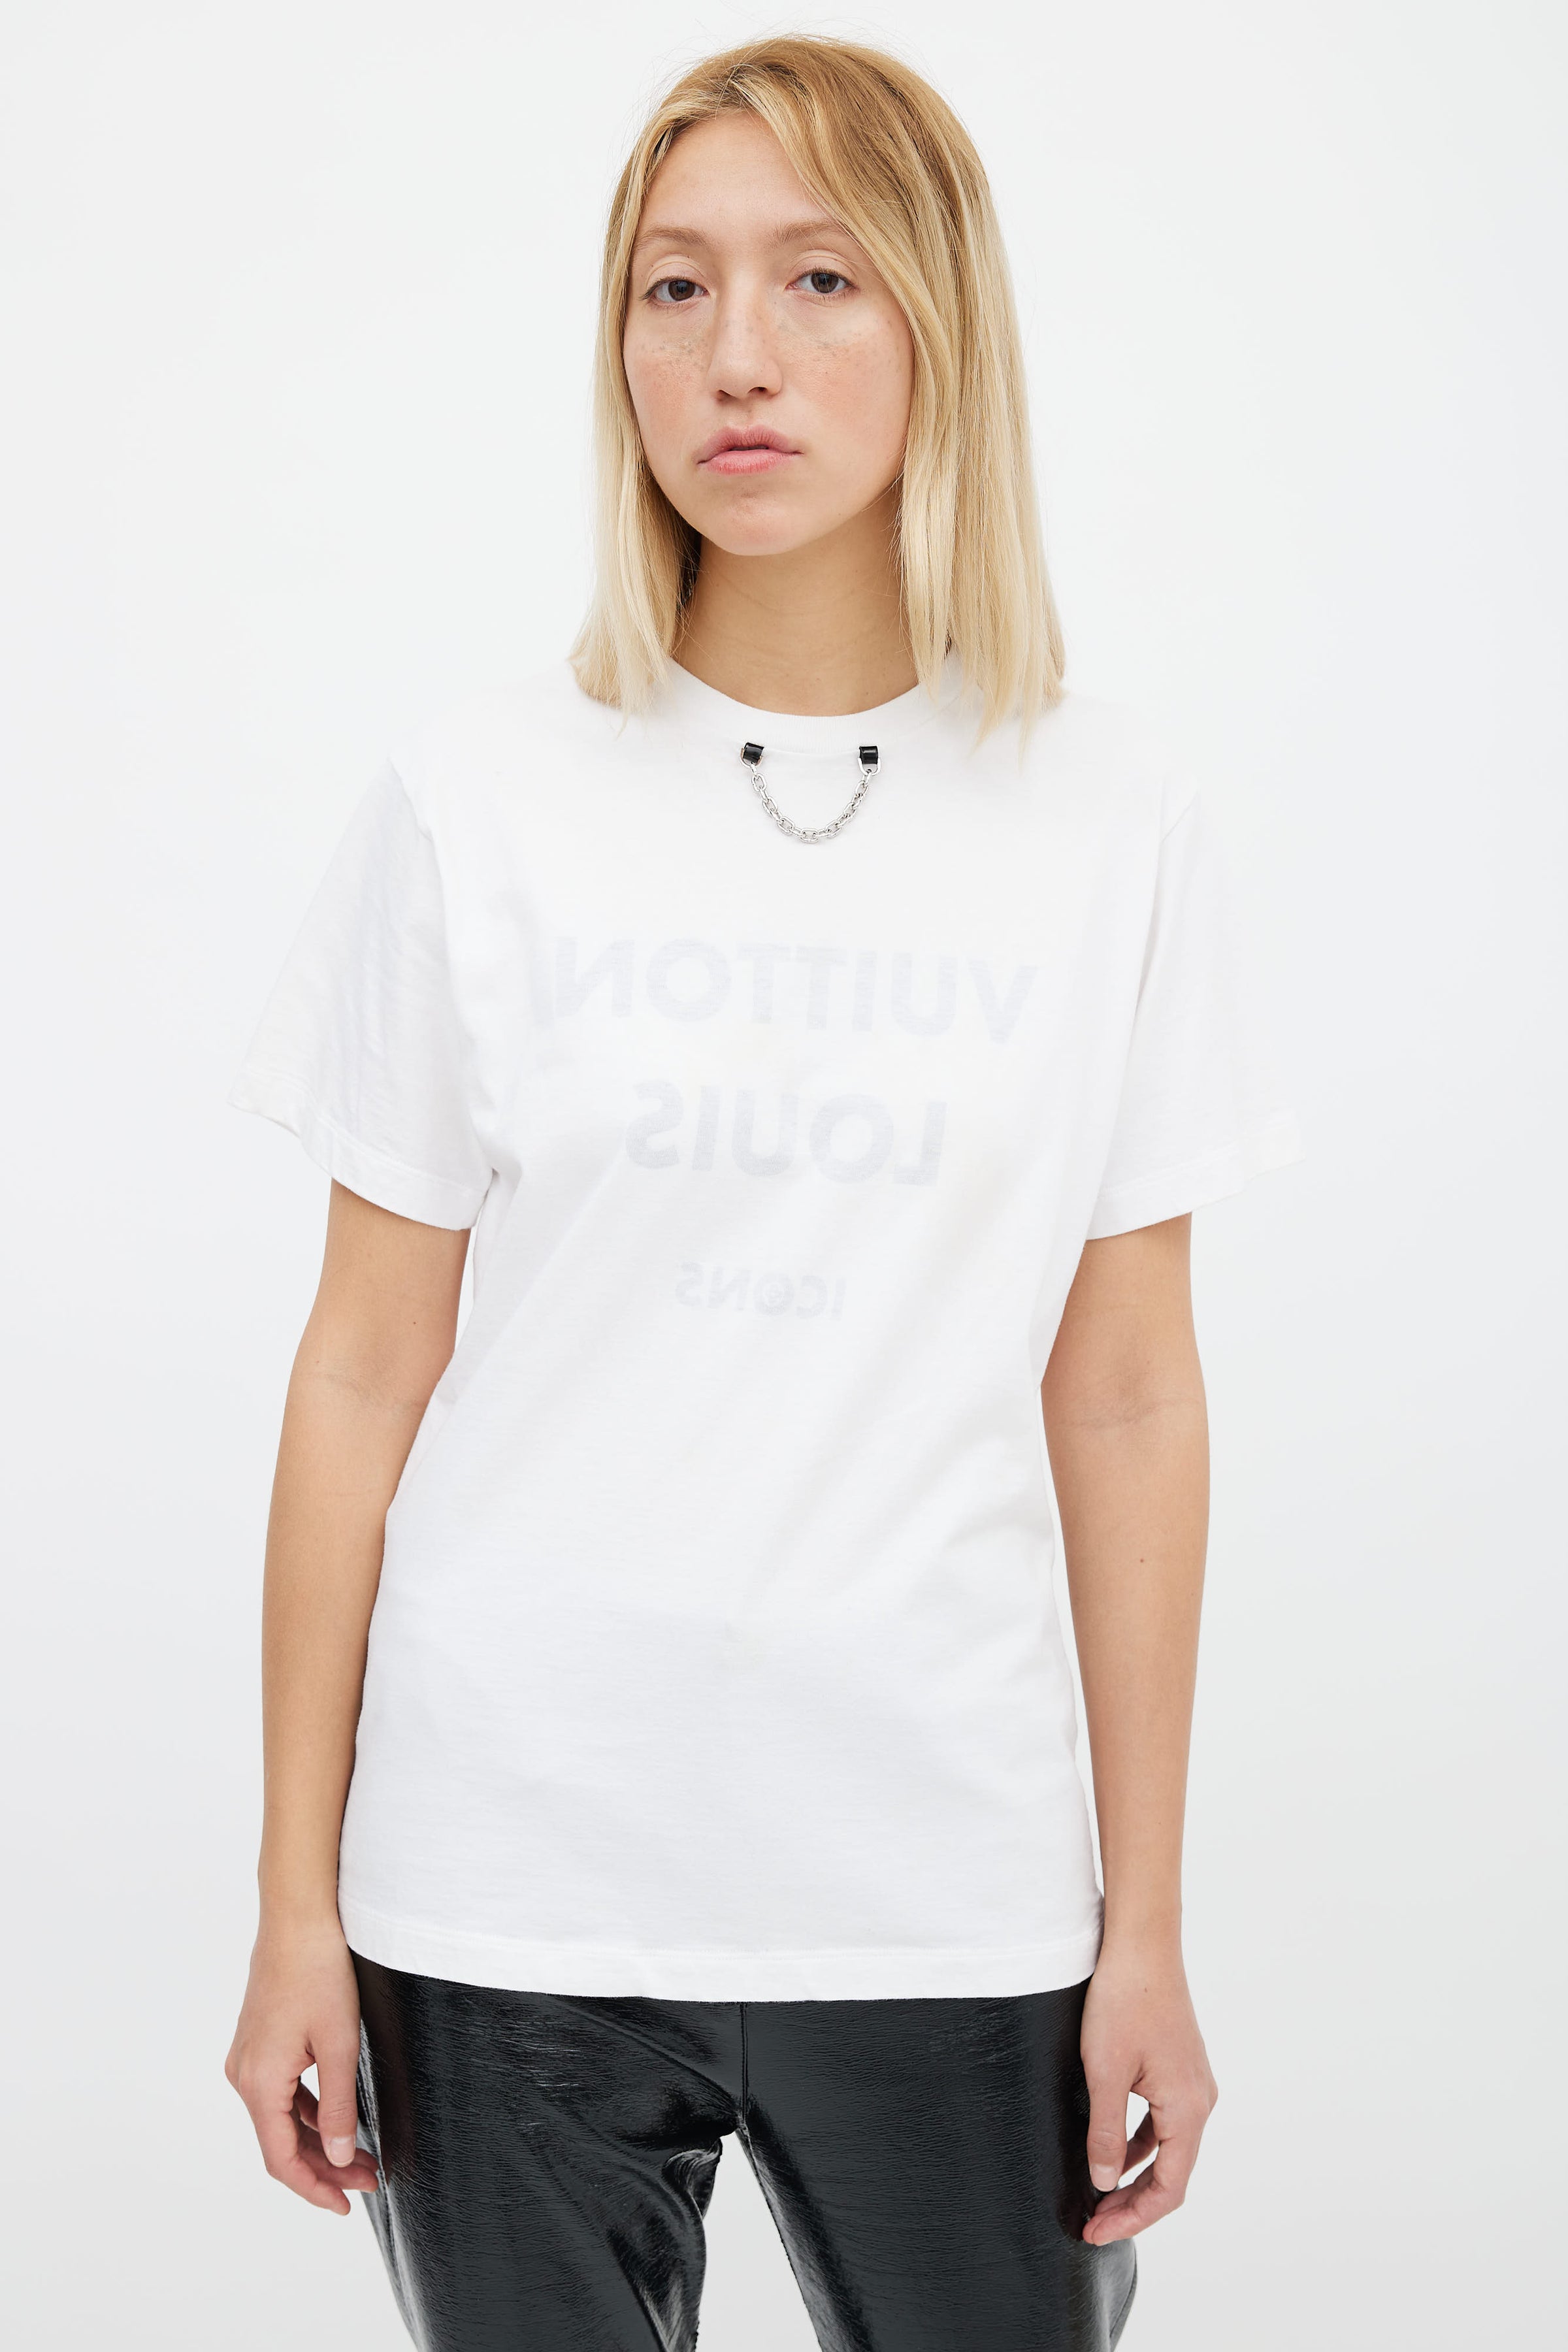 Louis vuitton icon chain white T shirt, Women's Fashion, Tops